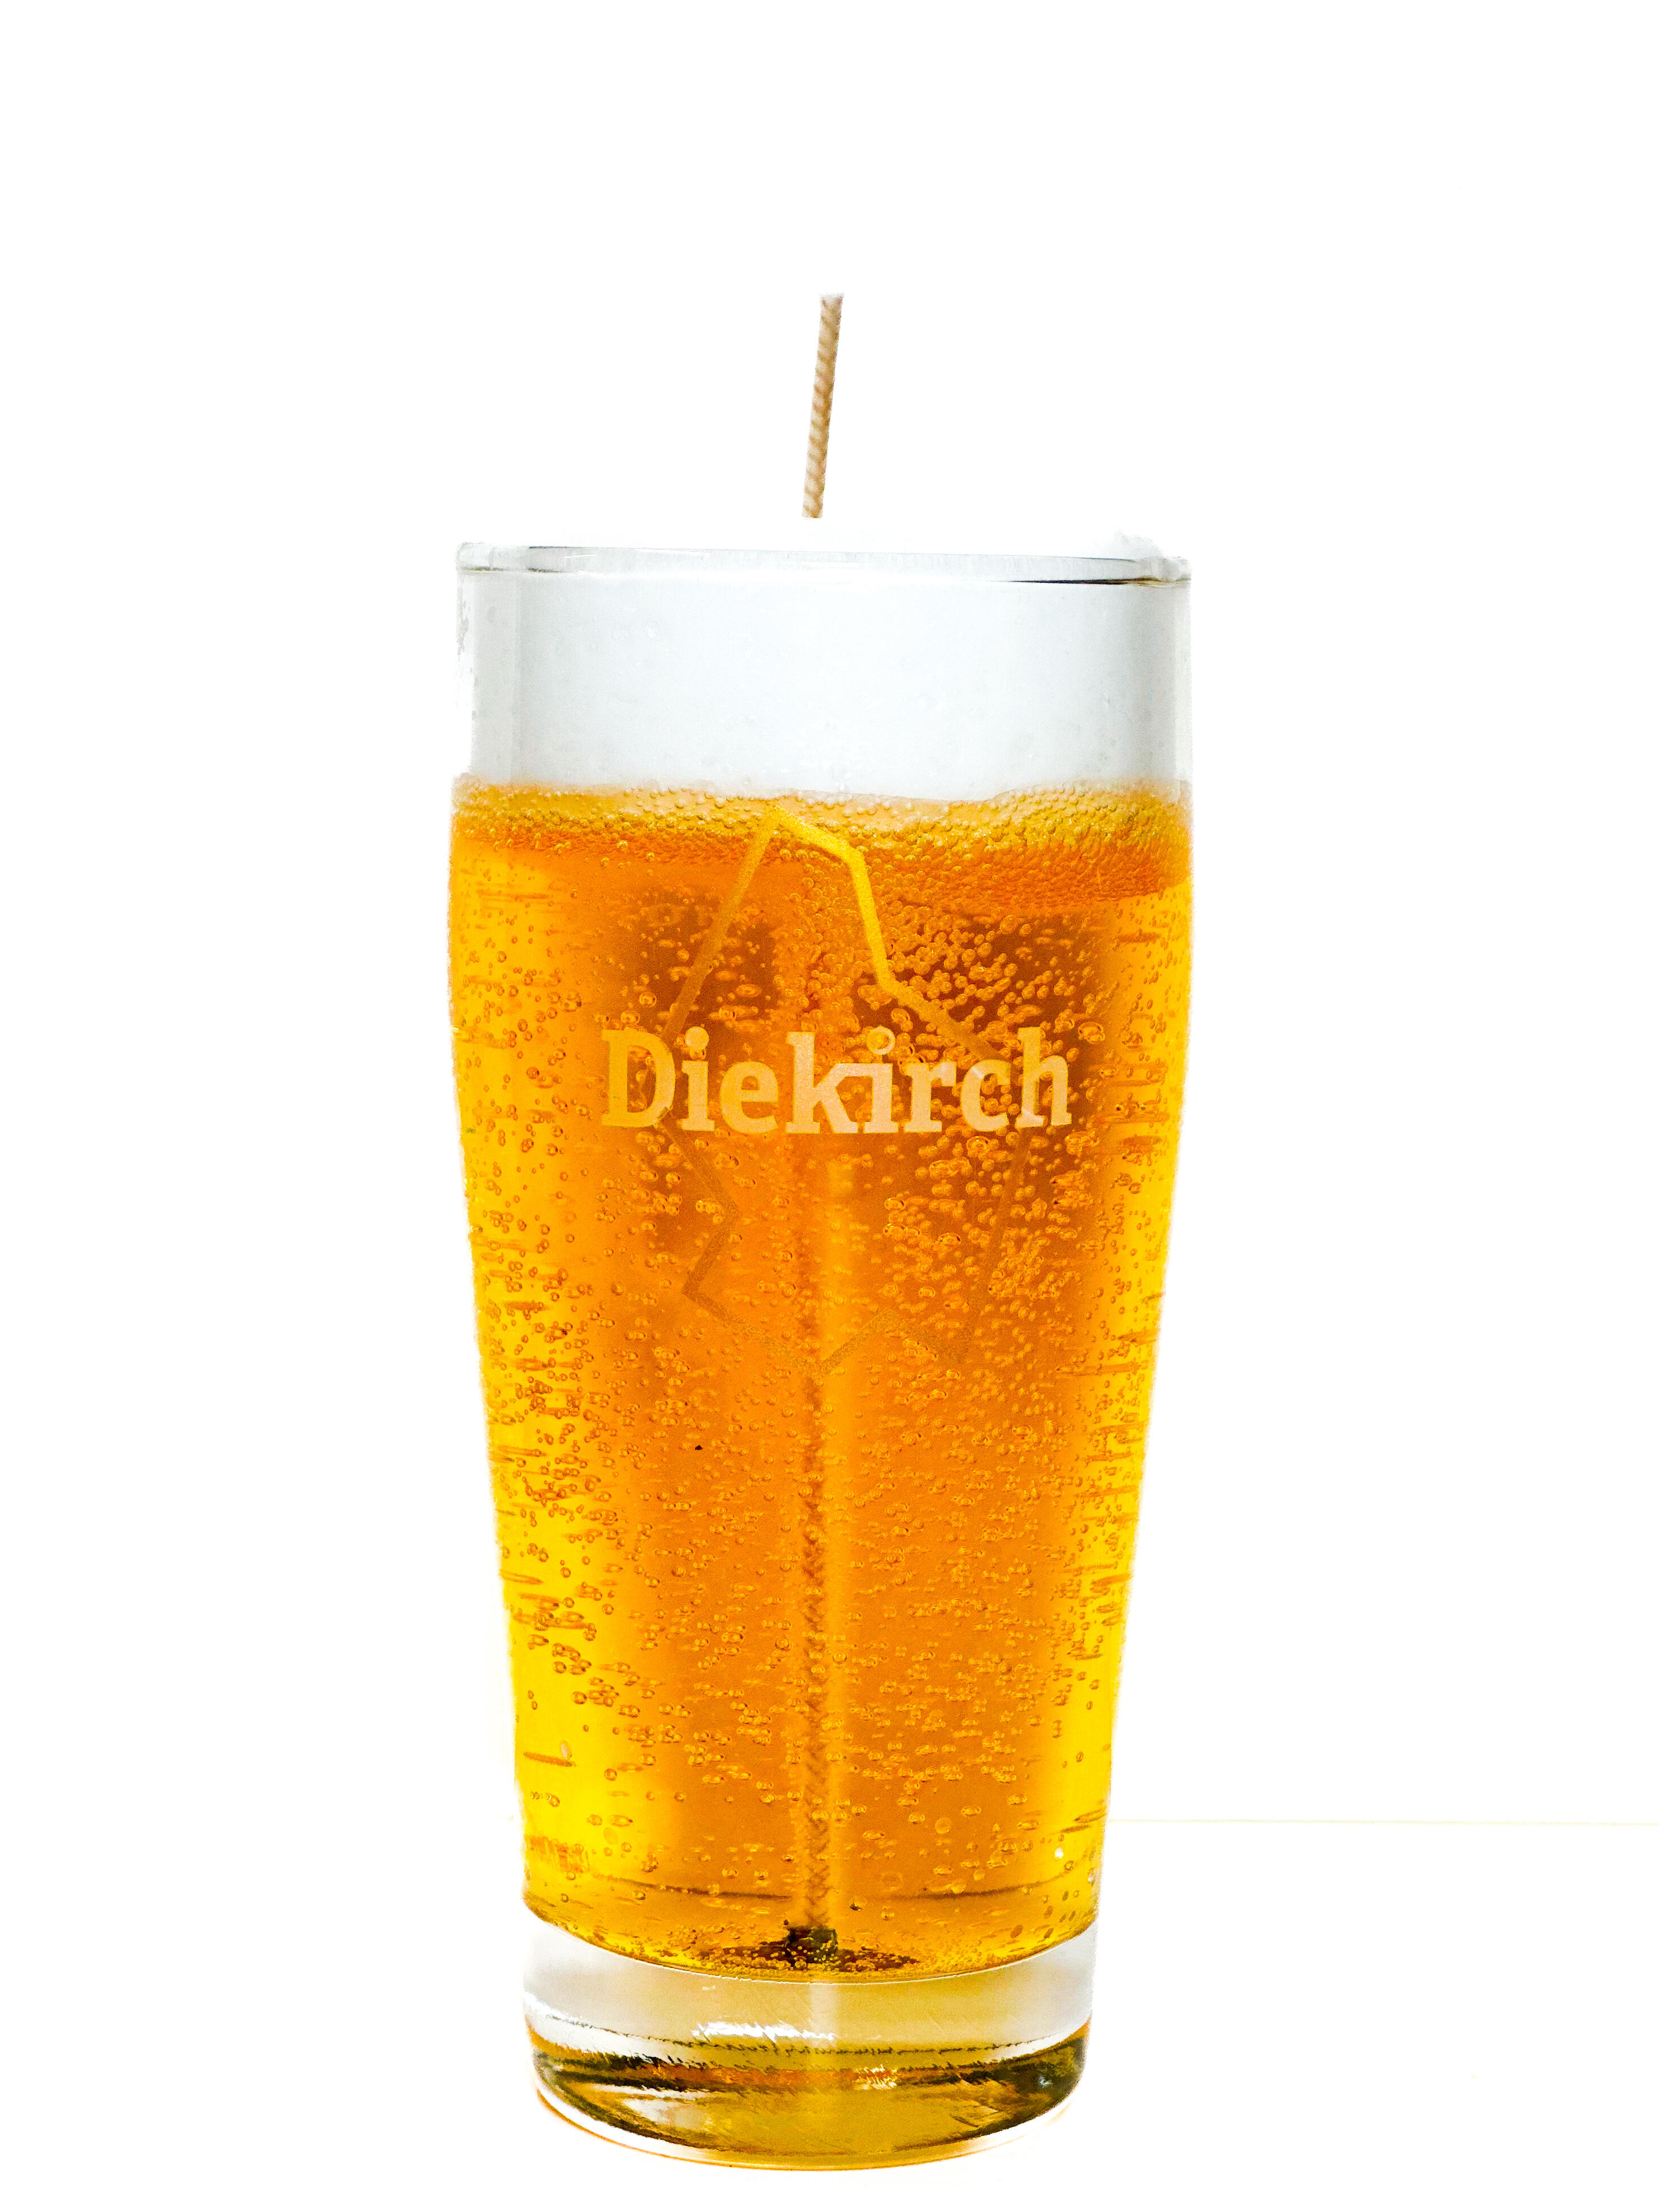 Bougie bière "Mini" - Diekirch